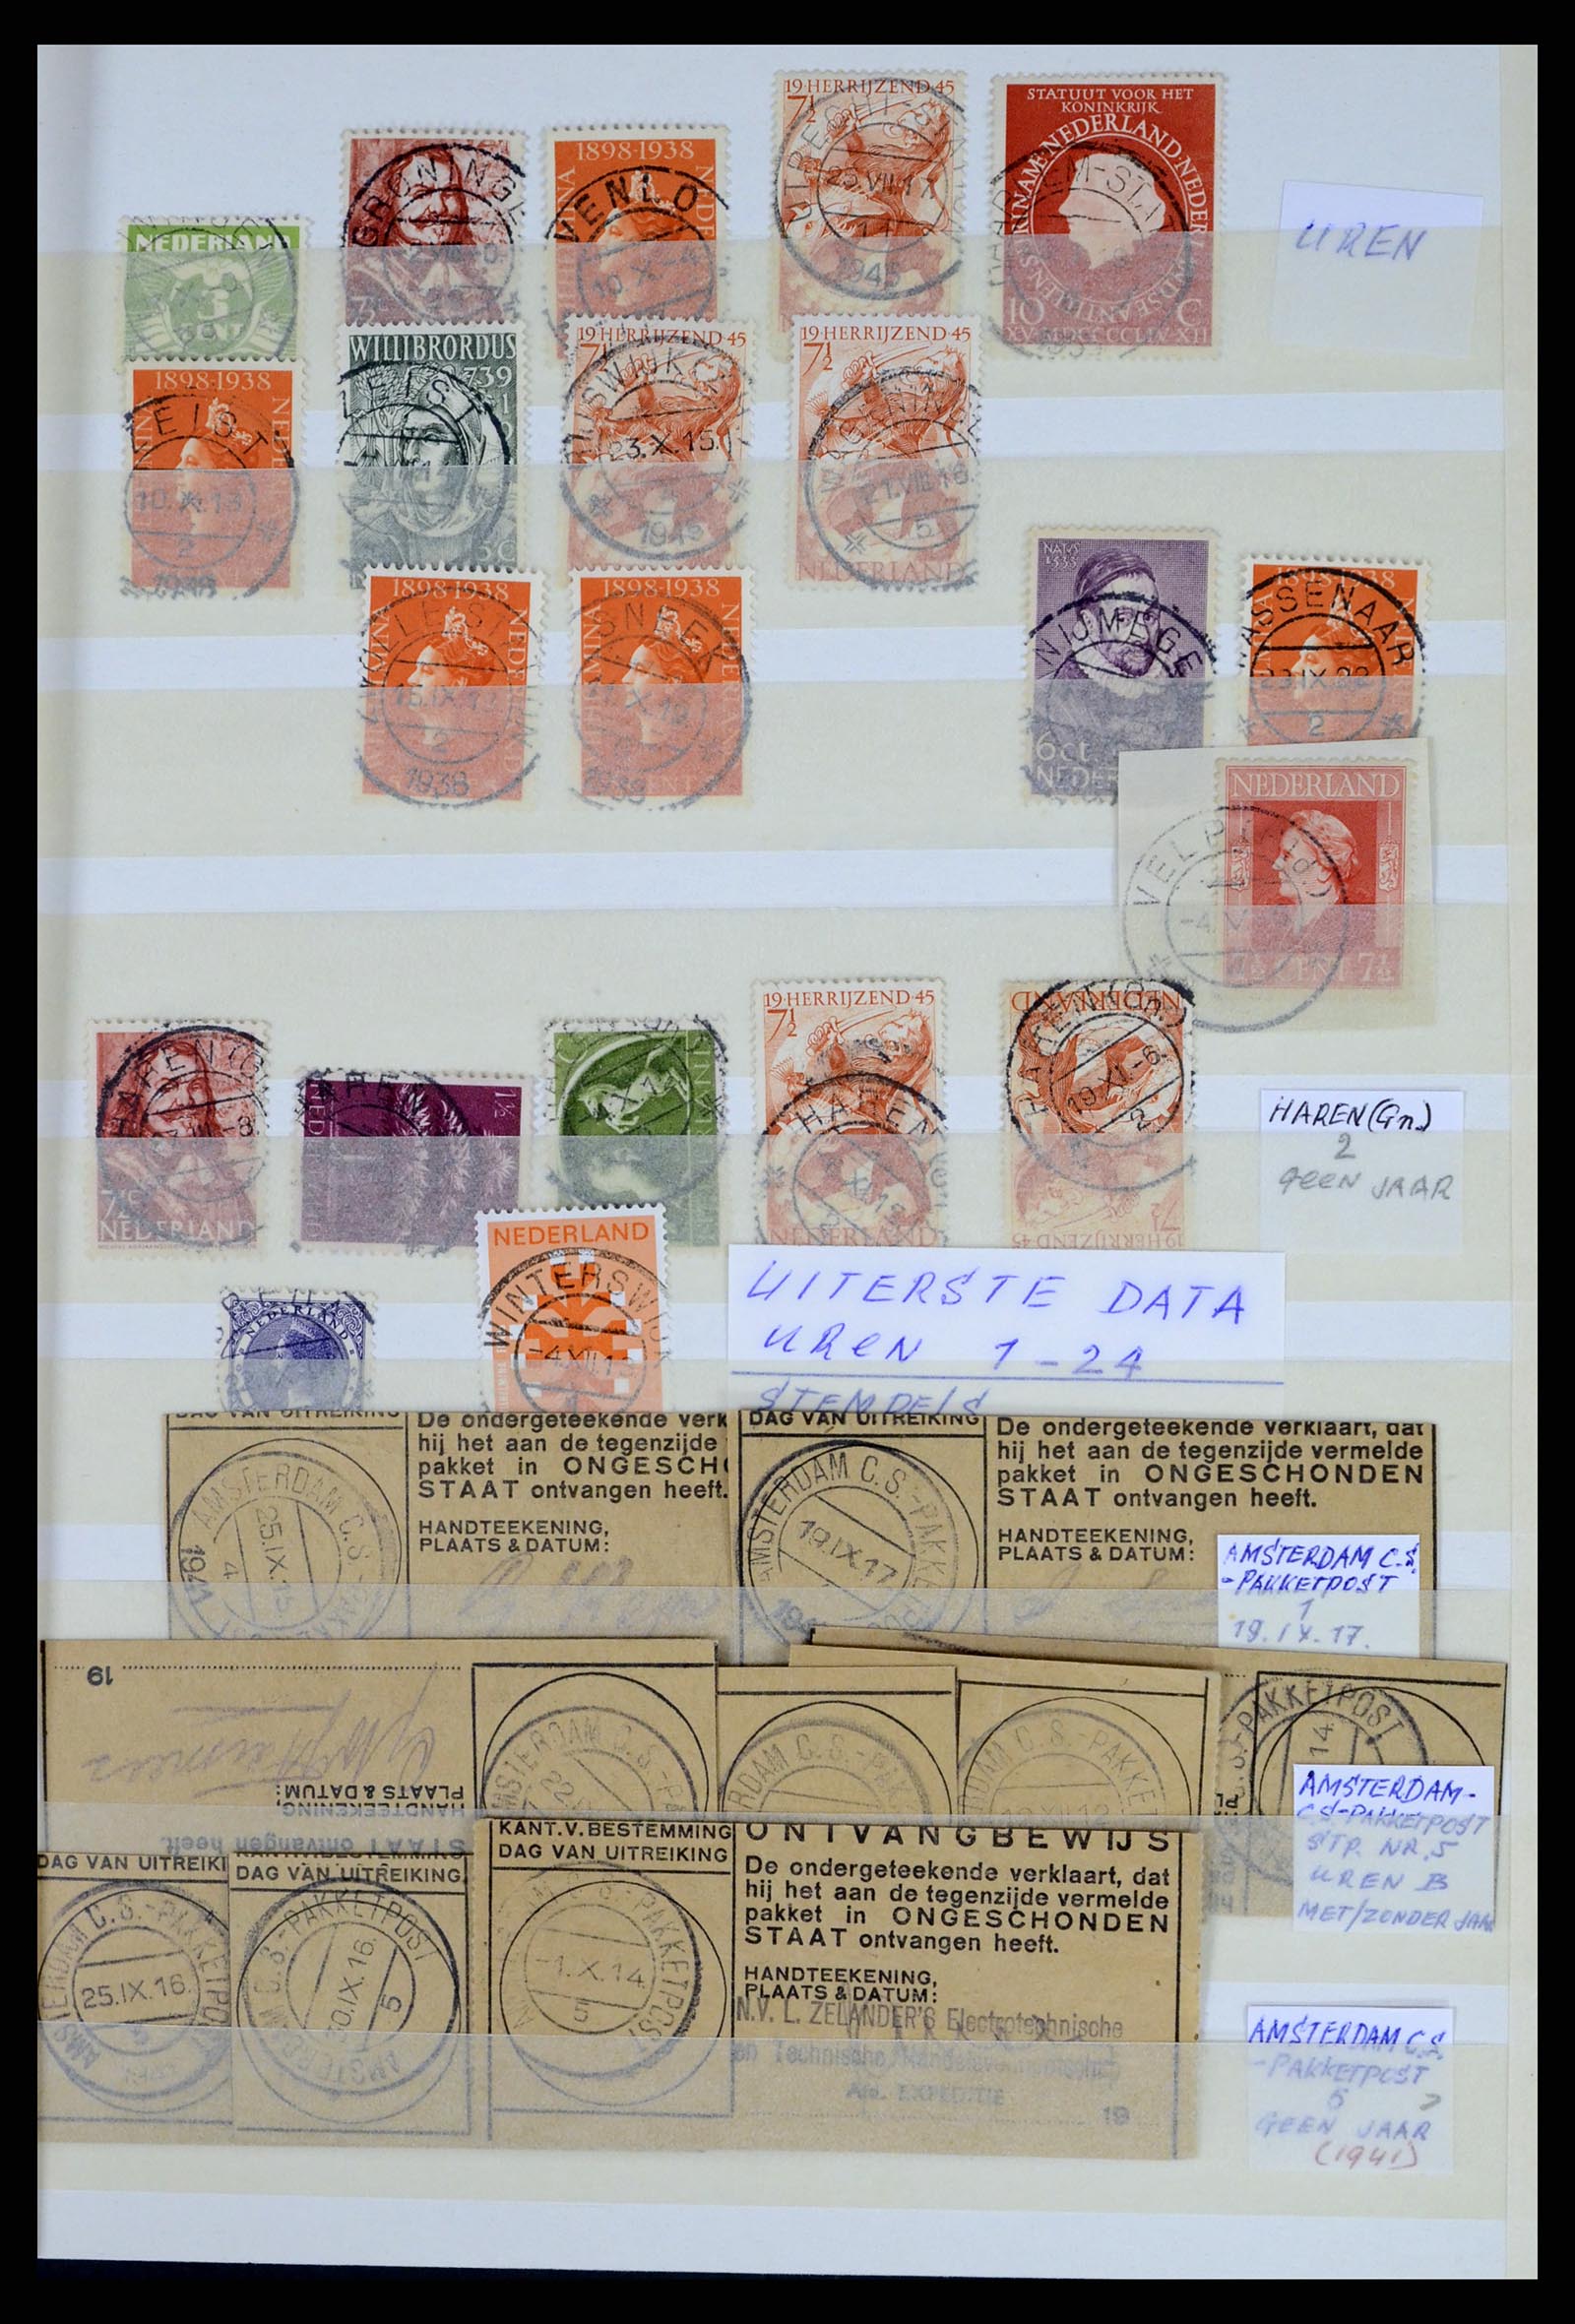 37424 001 - Stamp collection 37424 Netherlands shortbar cancels.